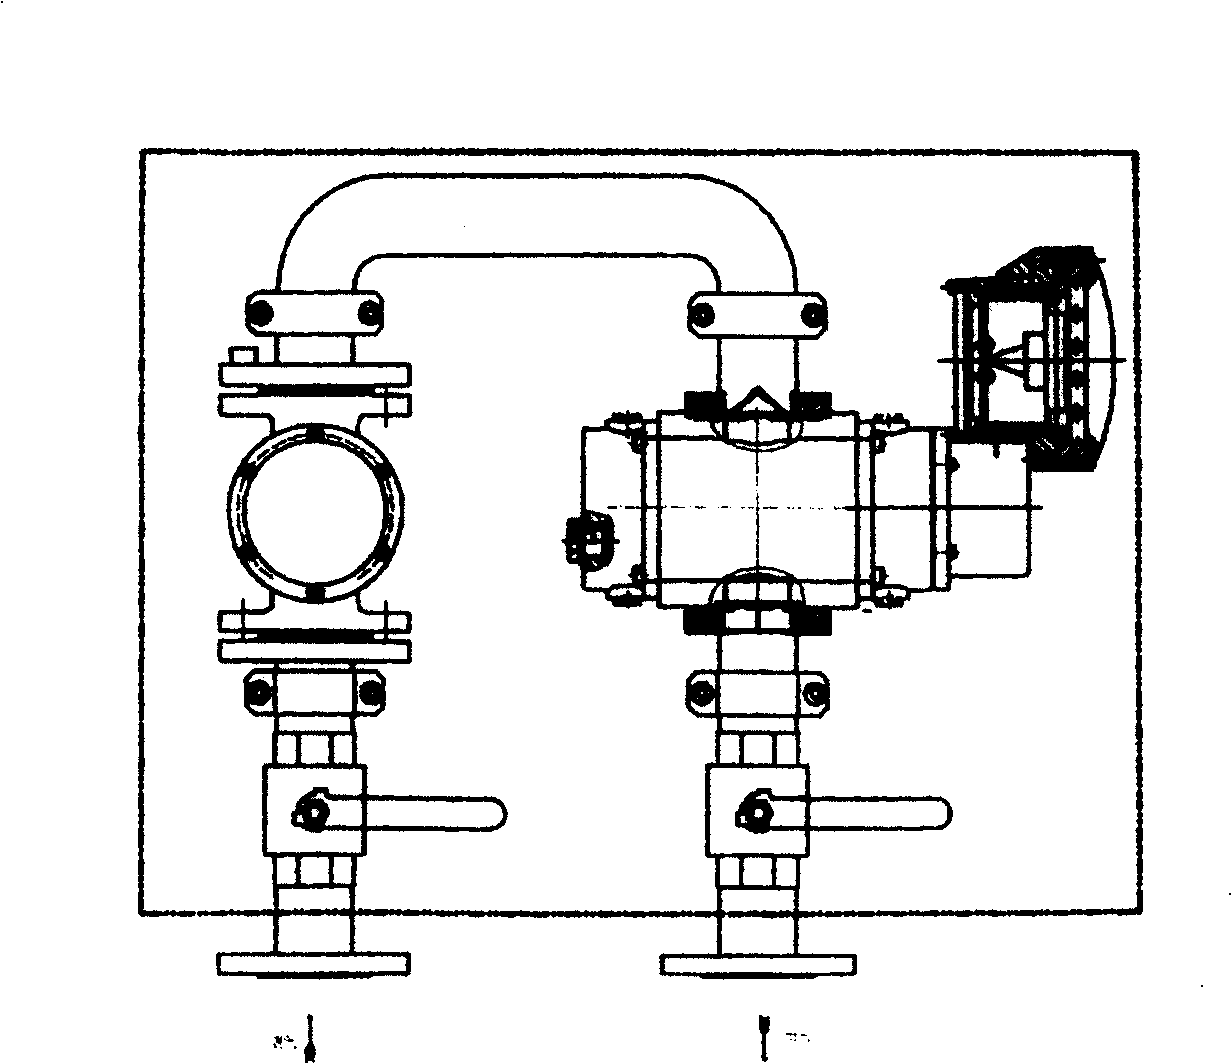 Gauging box of Roots gas flowmeter